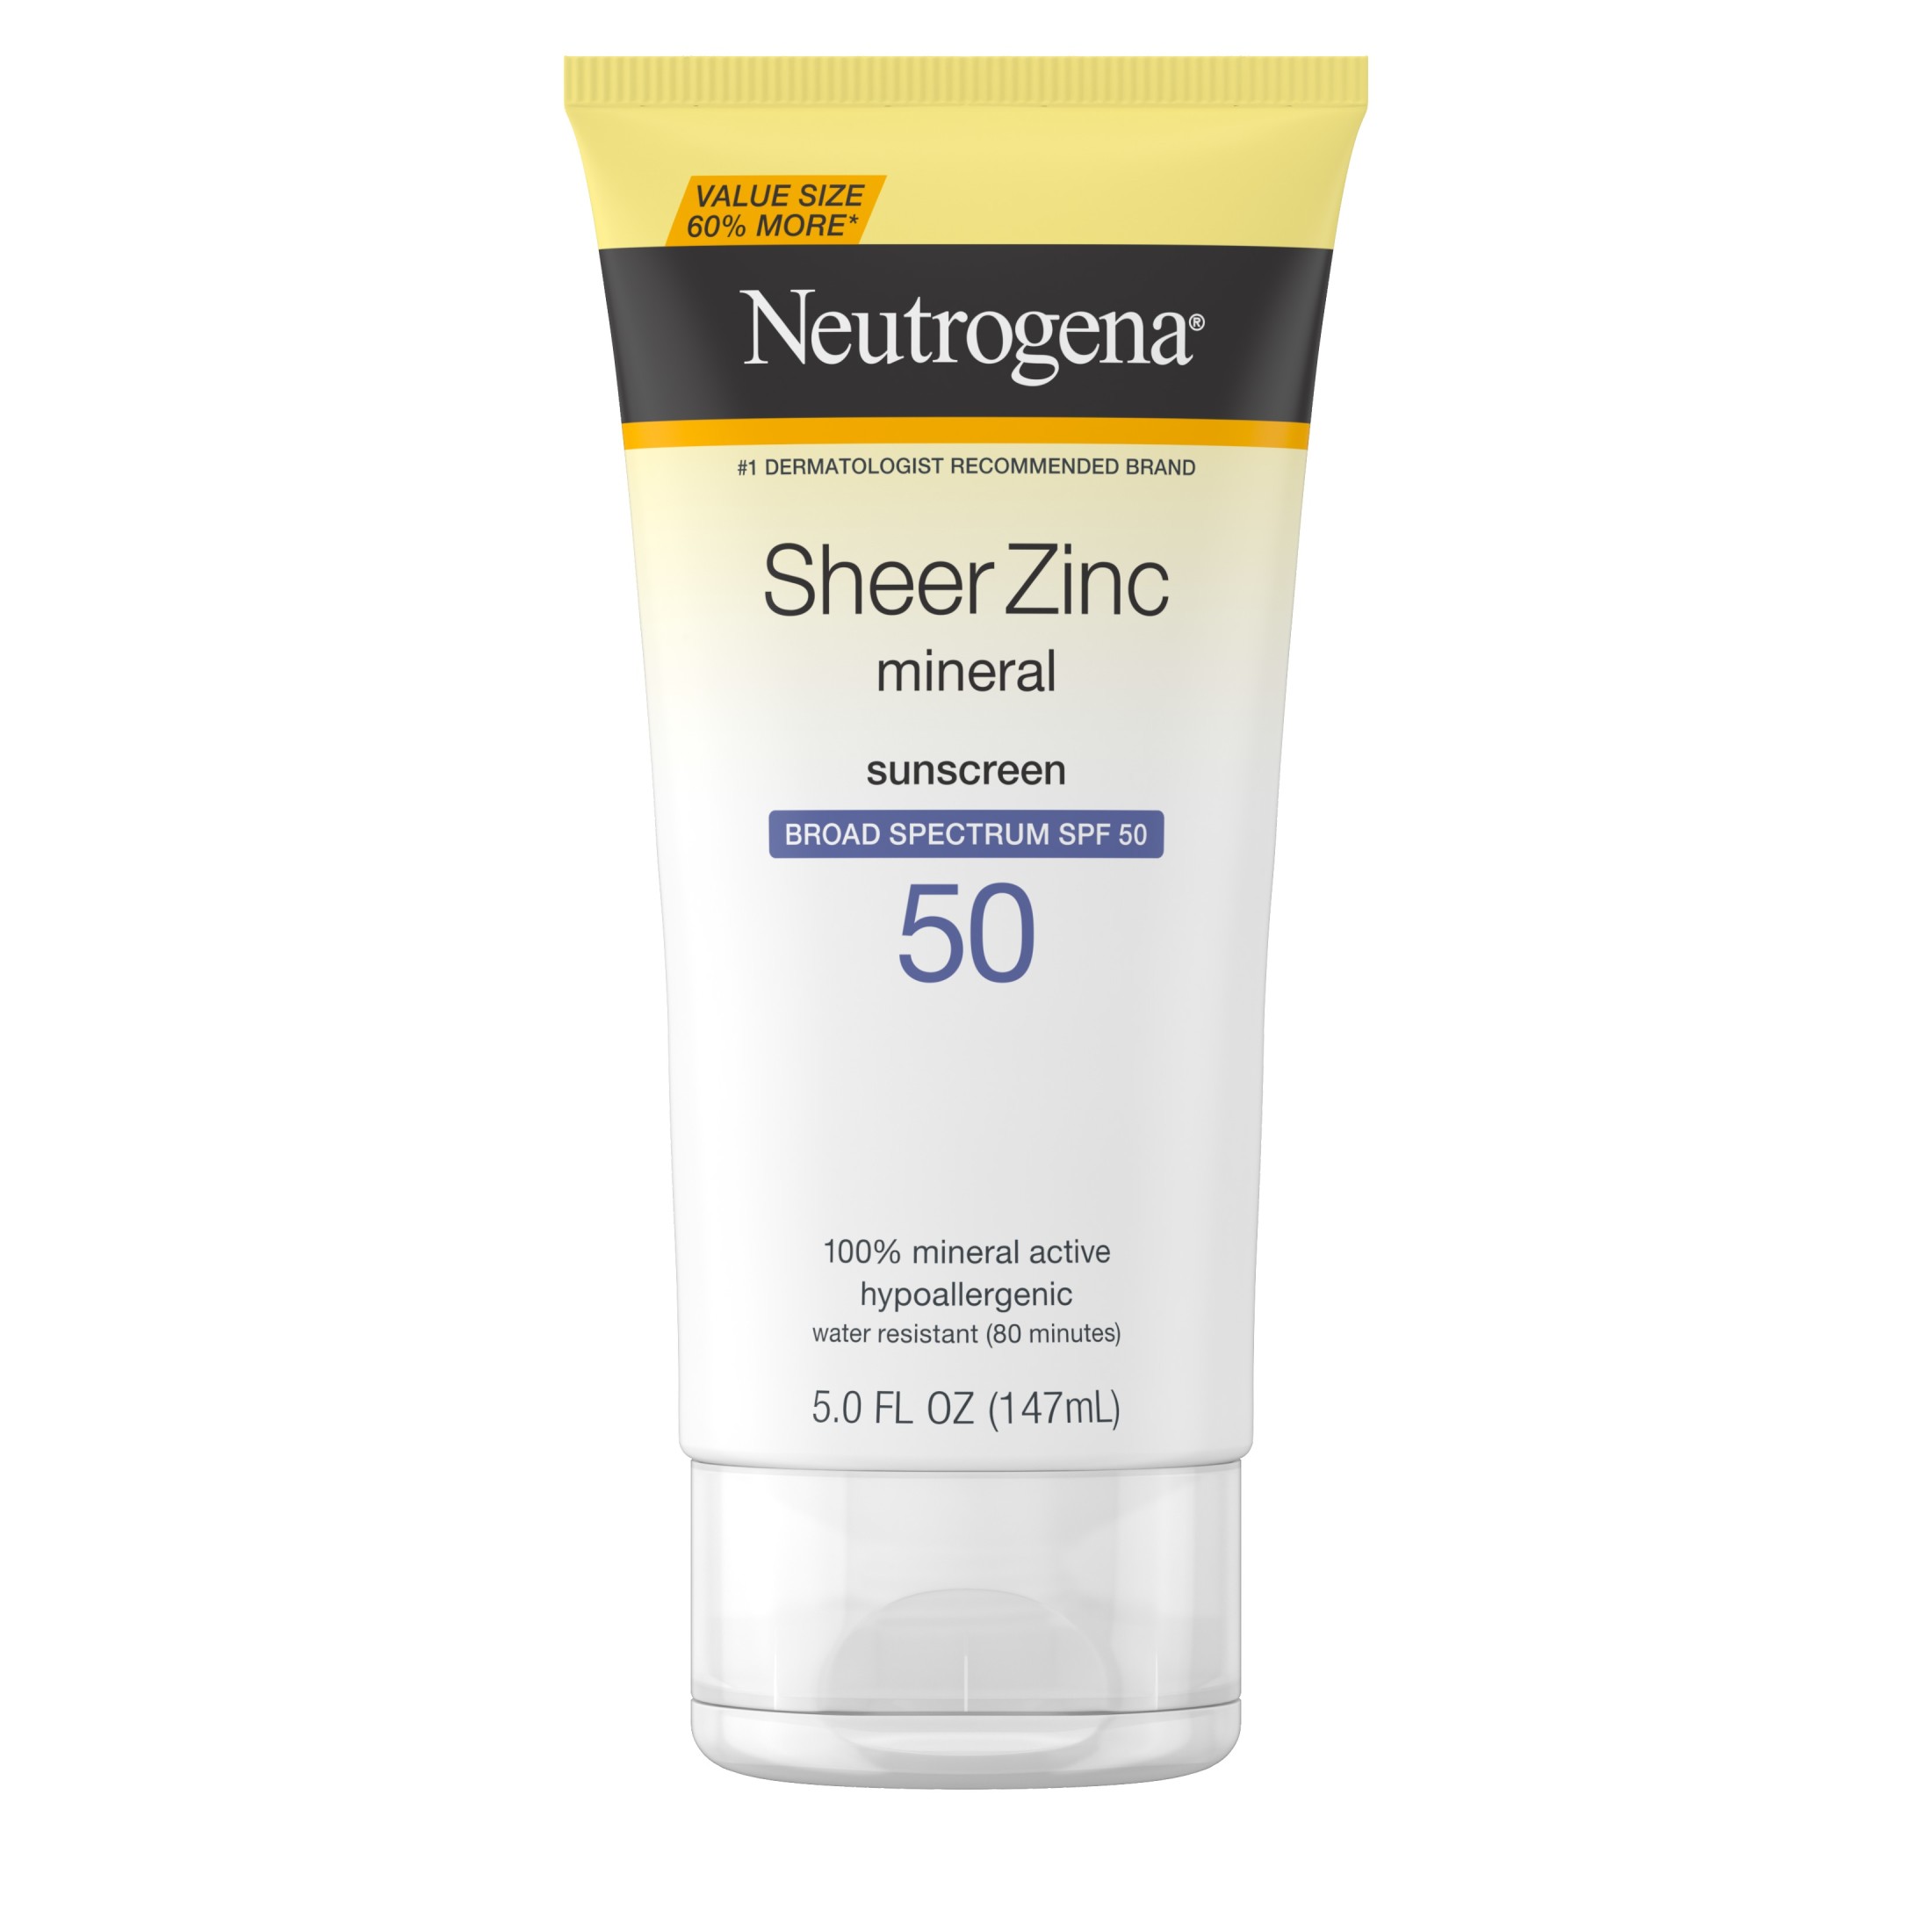 Neutrogena Sheer Zinc Sunscreen Lotion SPF 50, Value-Size, 5 fl. oz - image 1 of 9